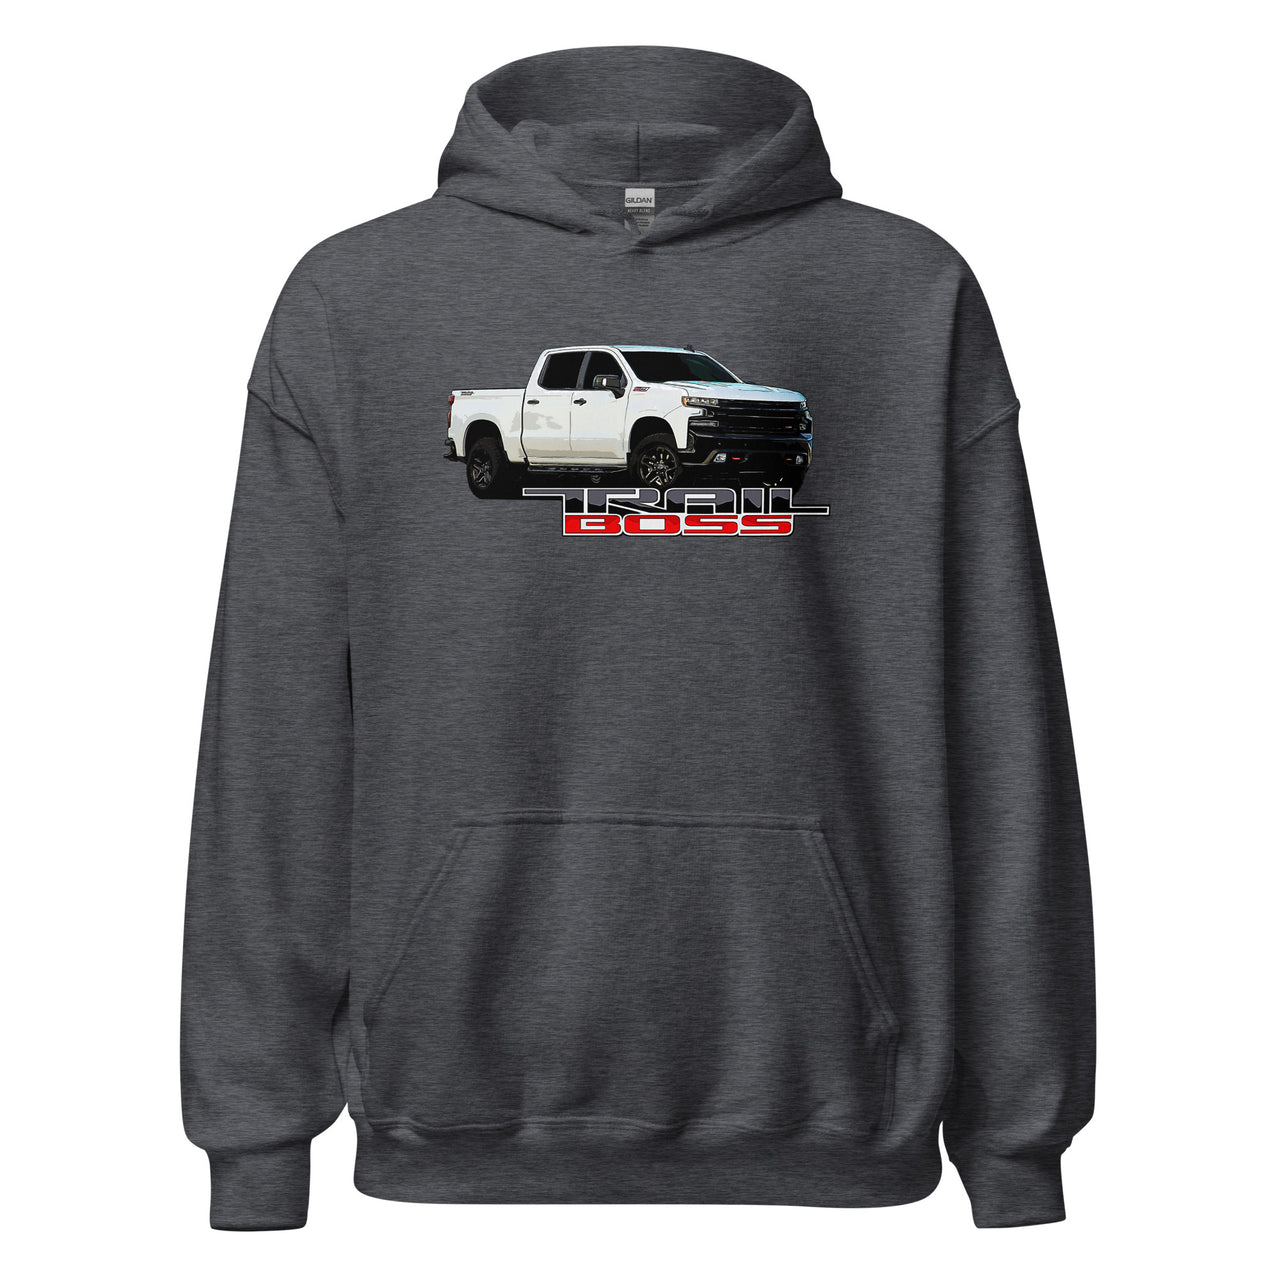 Trail Boss Truck Hoodie Sweatshirt